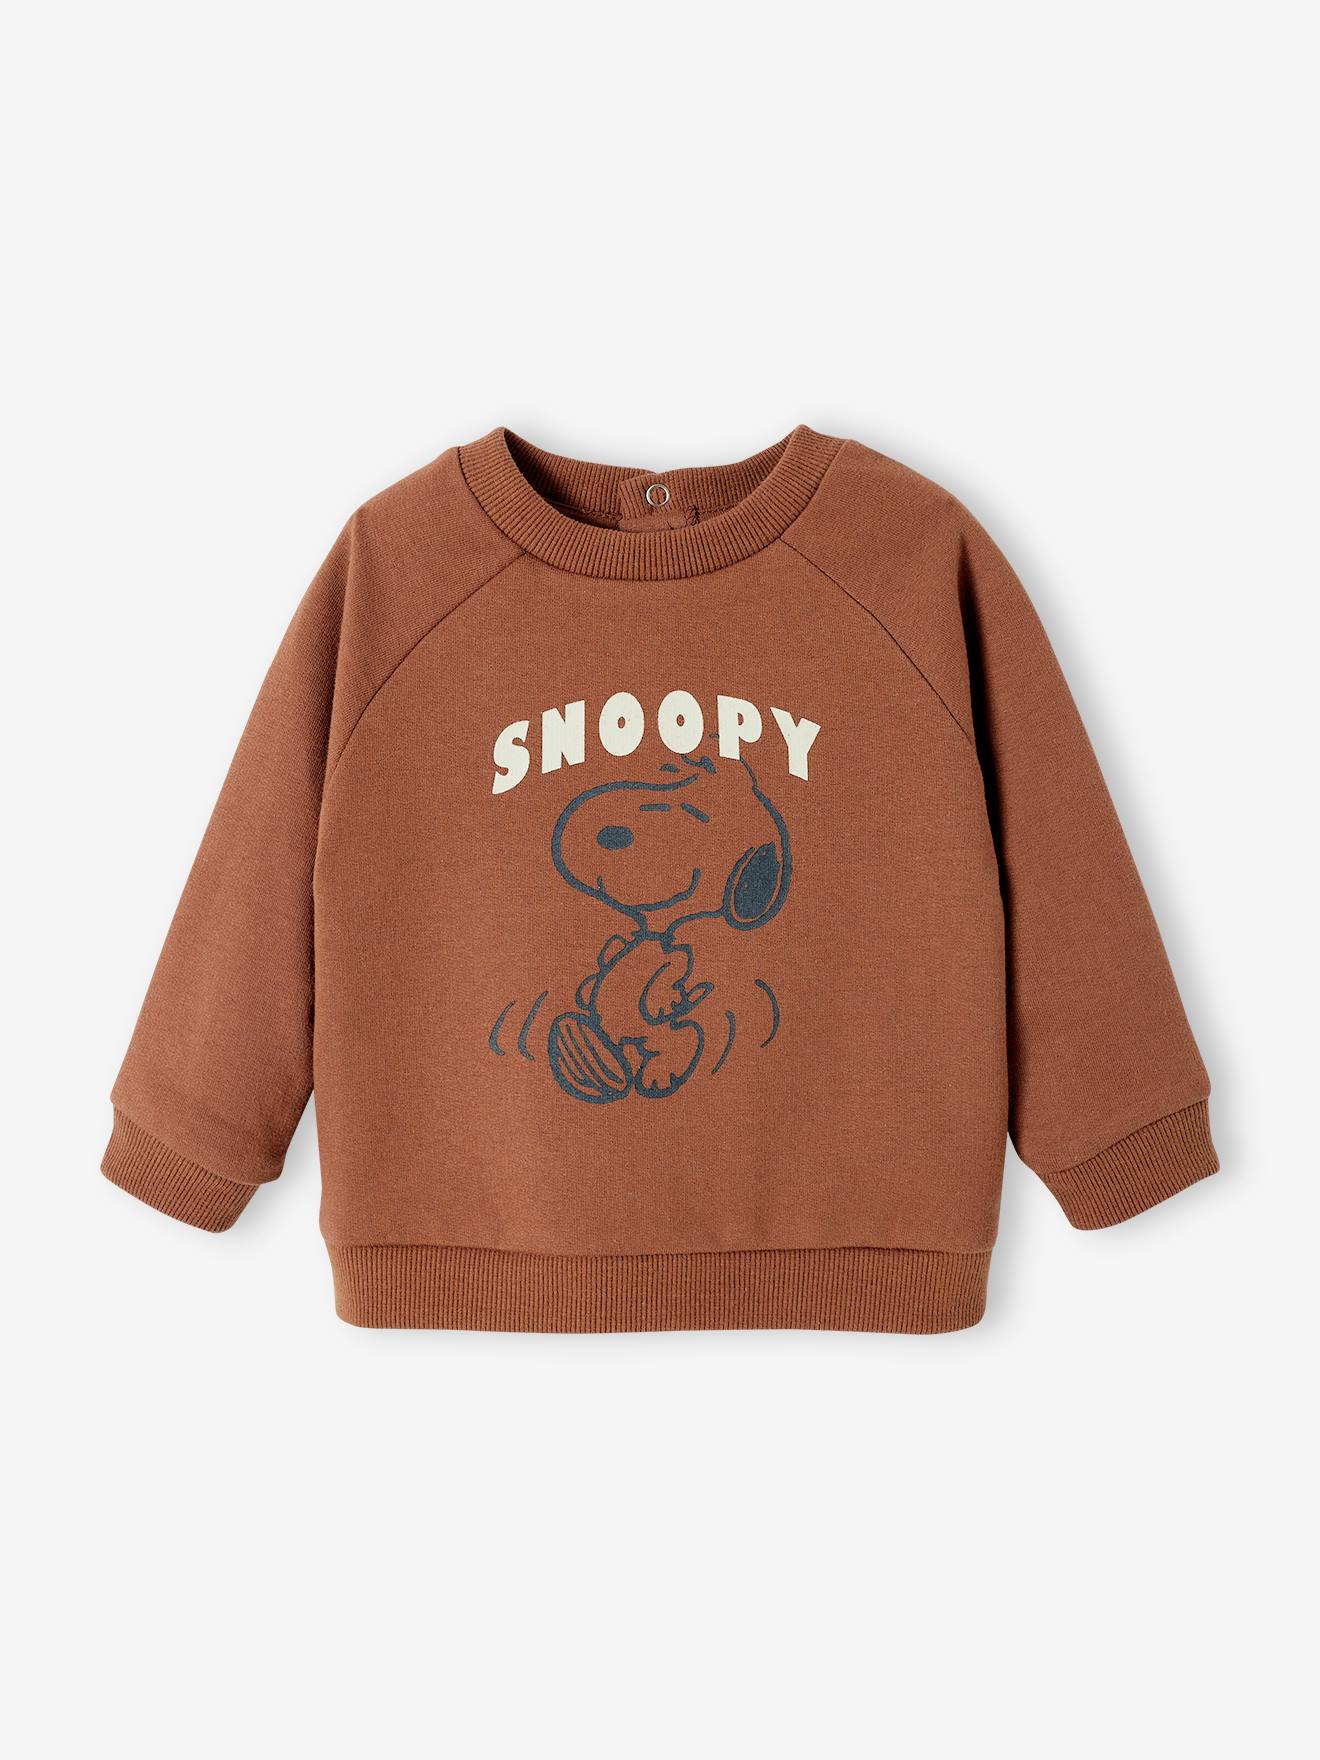 Snoopy by Peanuts(r) Sweatshirt for Babies chocolate